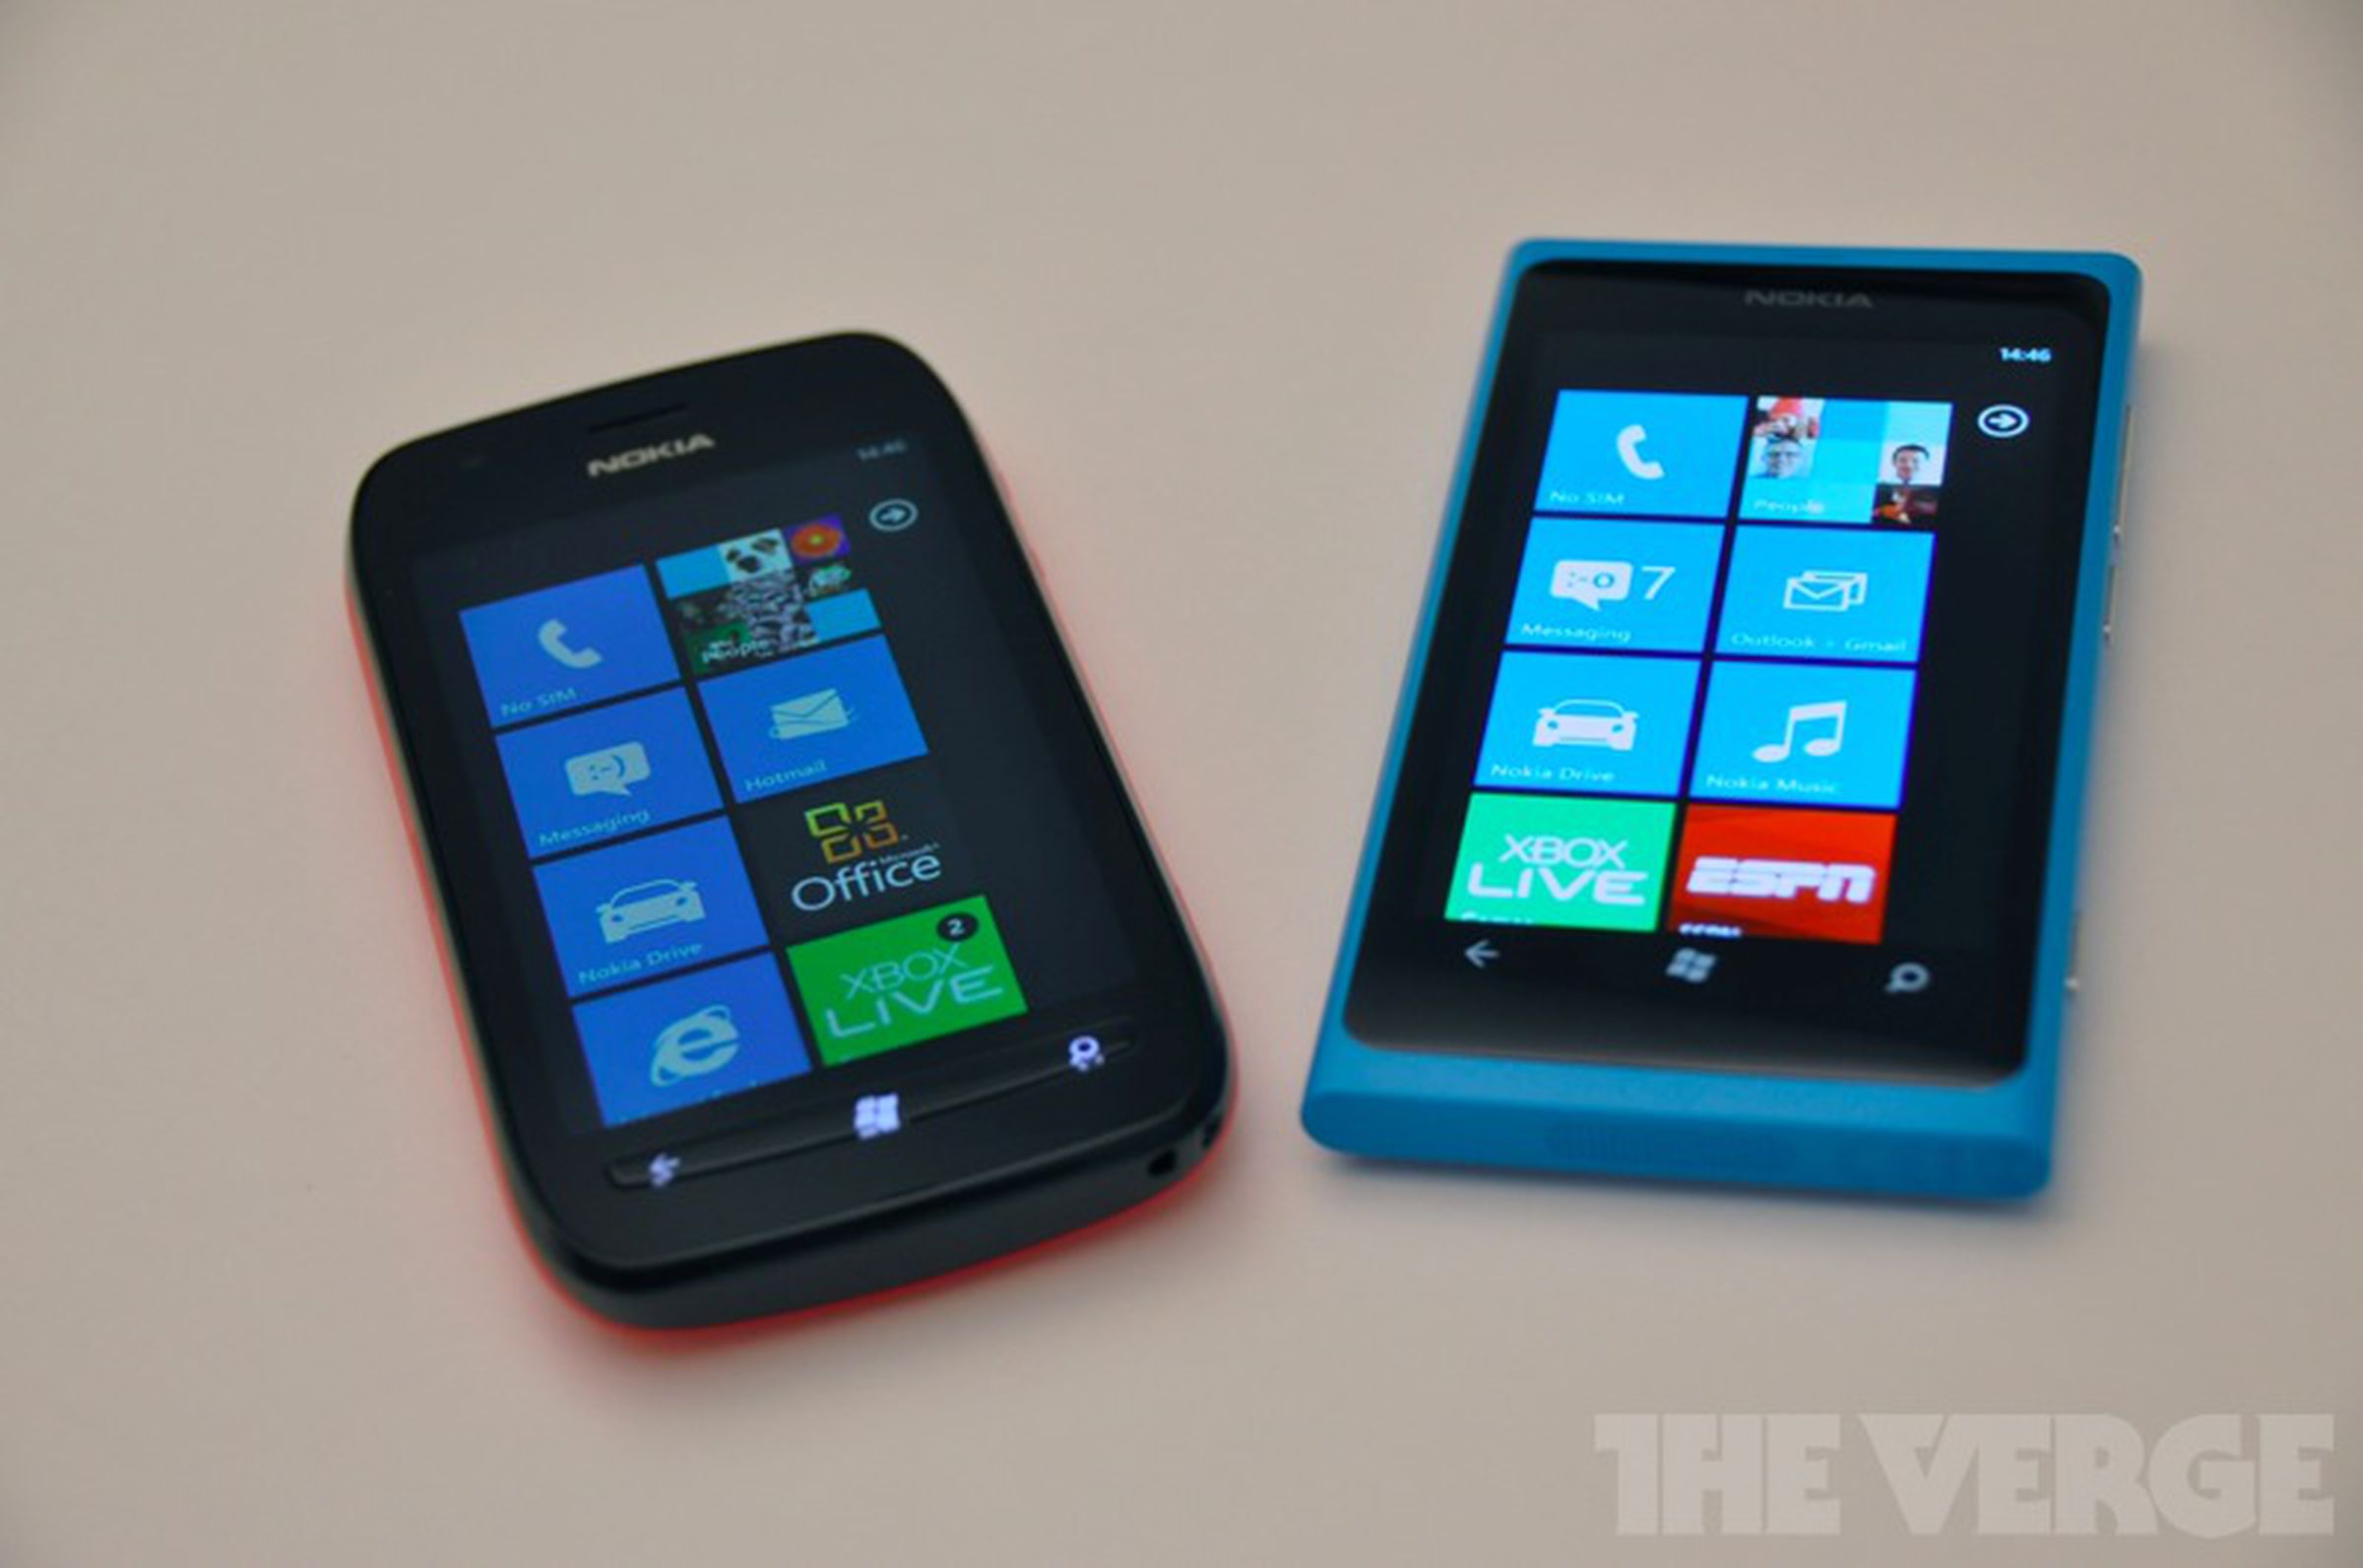 Nokia Lumia 800 and Lumia 710 side by side photos